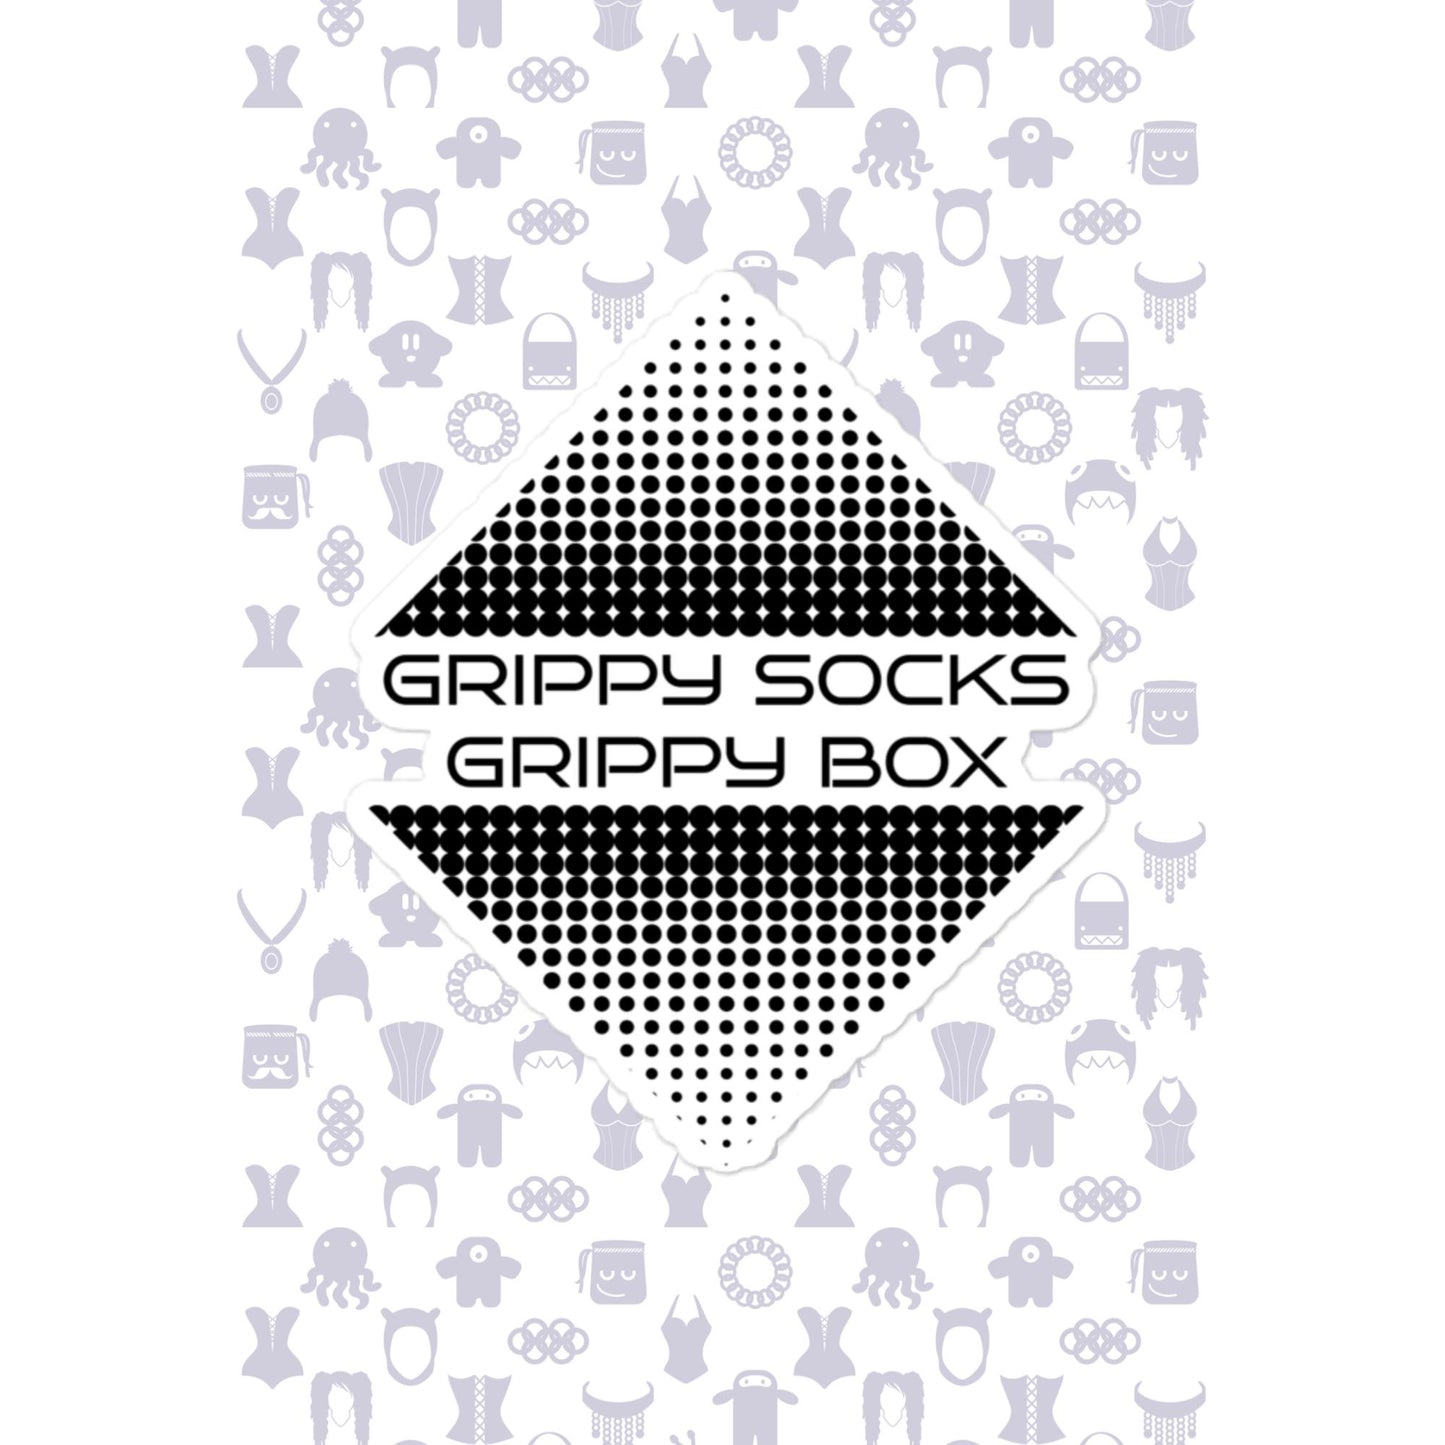 Grippy Socks Grippy Box Bubble-free stickers